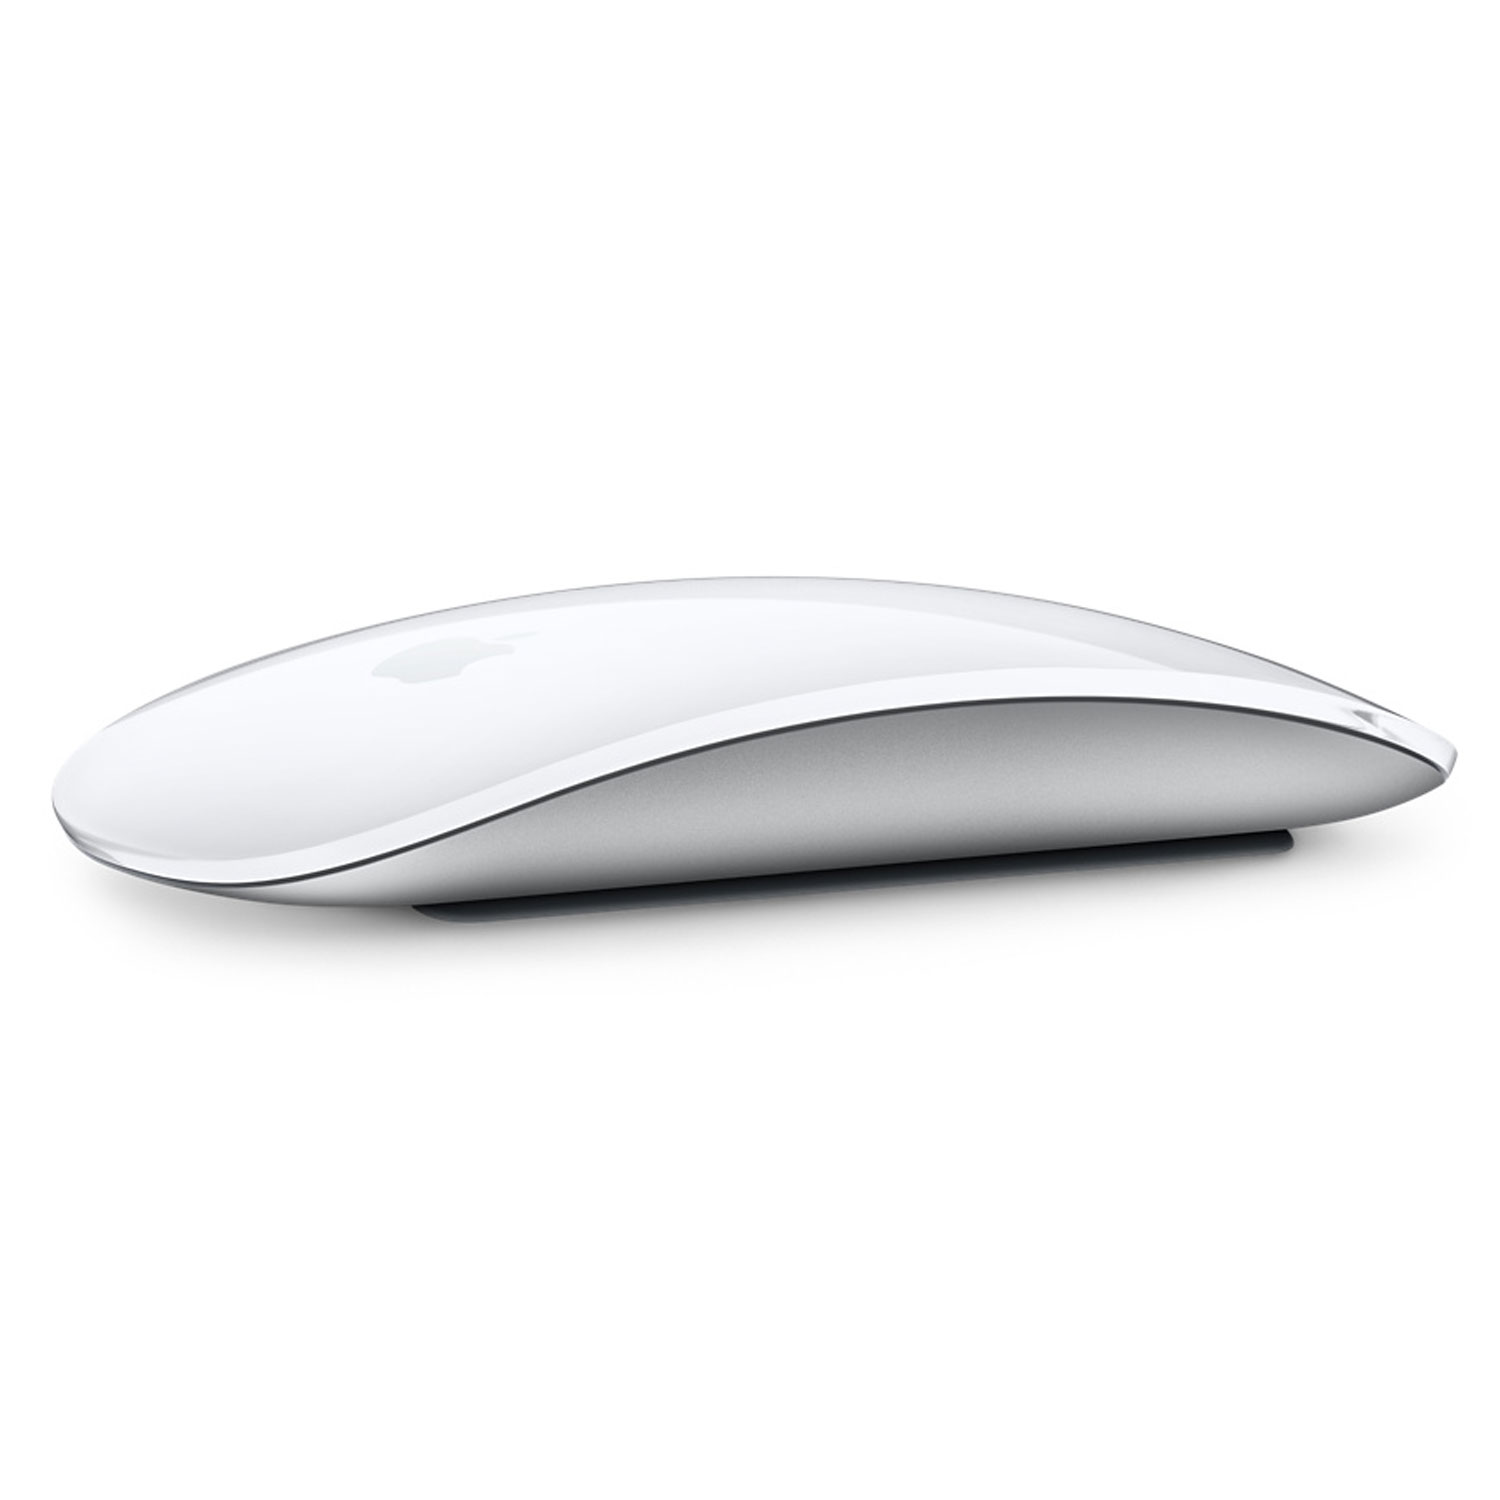 Mouse Apple Magic 2 MLA02ZE/A - Branco